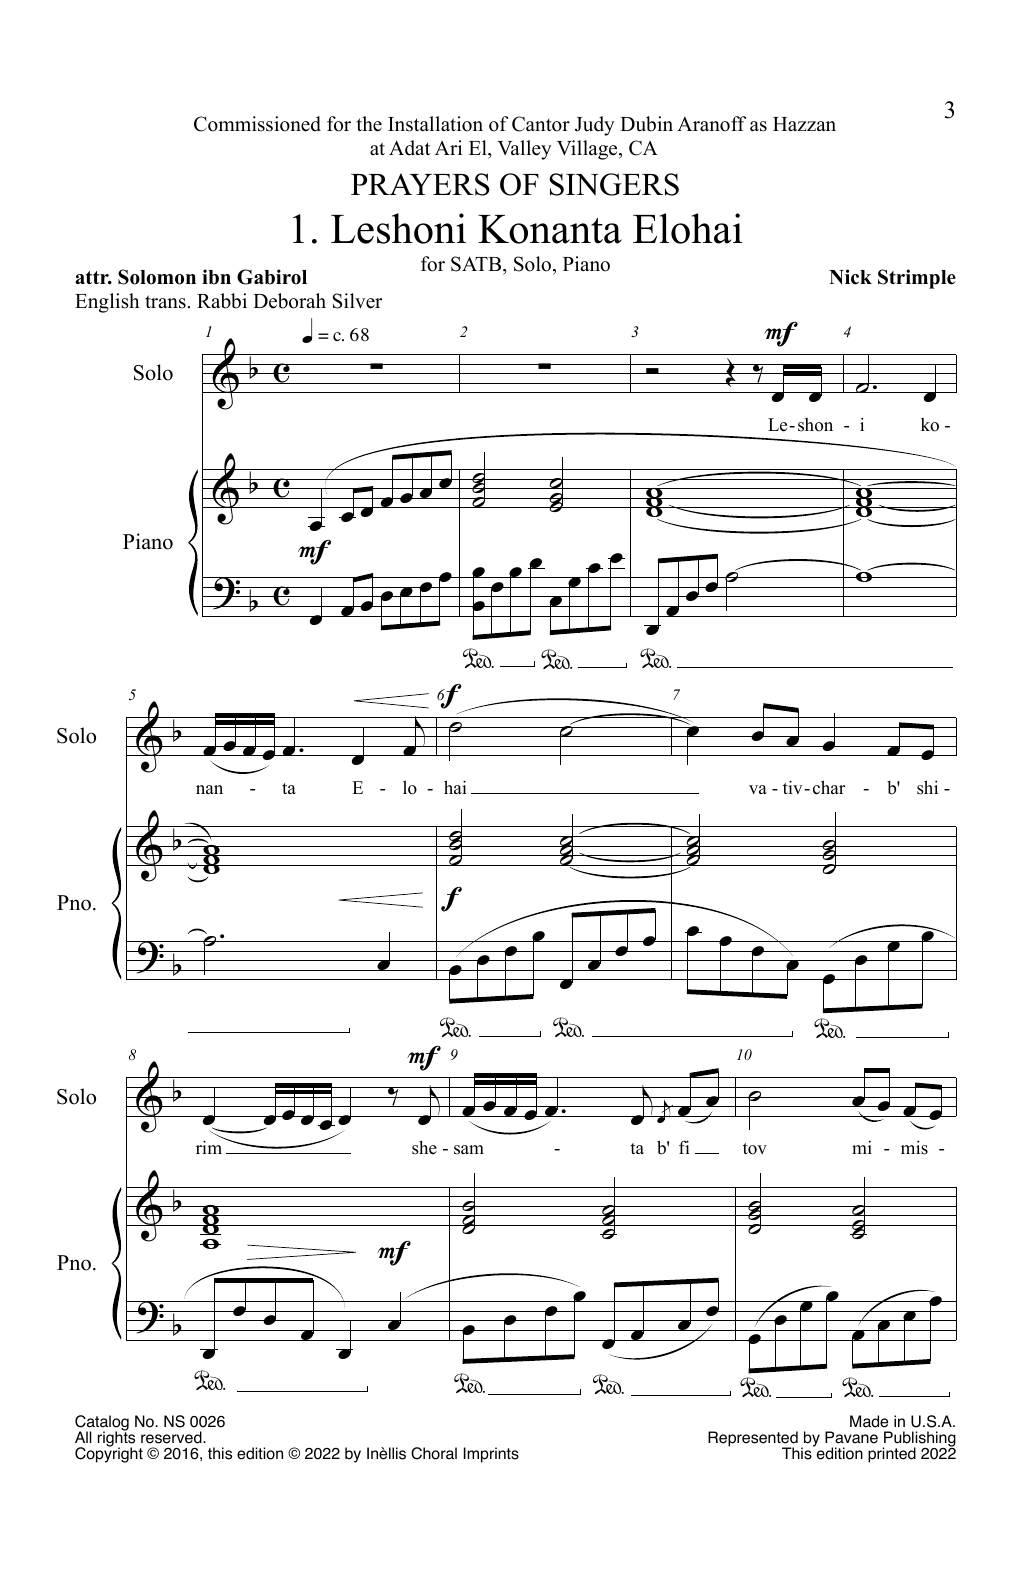 Download Nick Strimple Leshoni Konanta Elohai Sheet Music and learn how to play SATB Choir PDF digital score in minutes